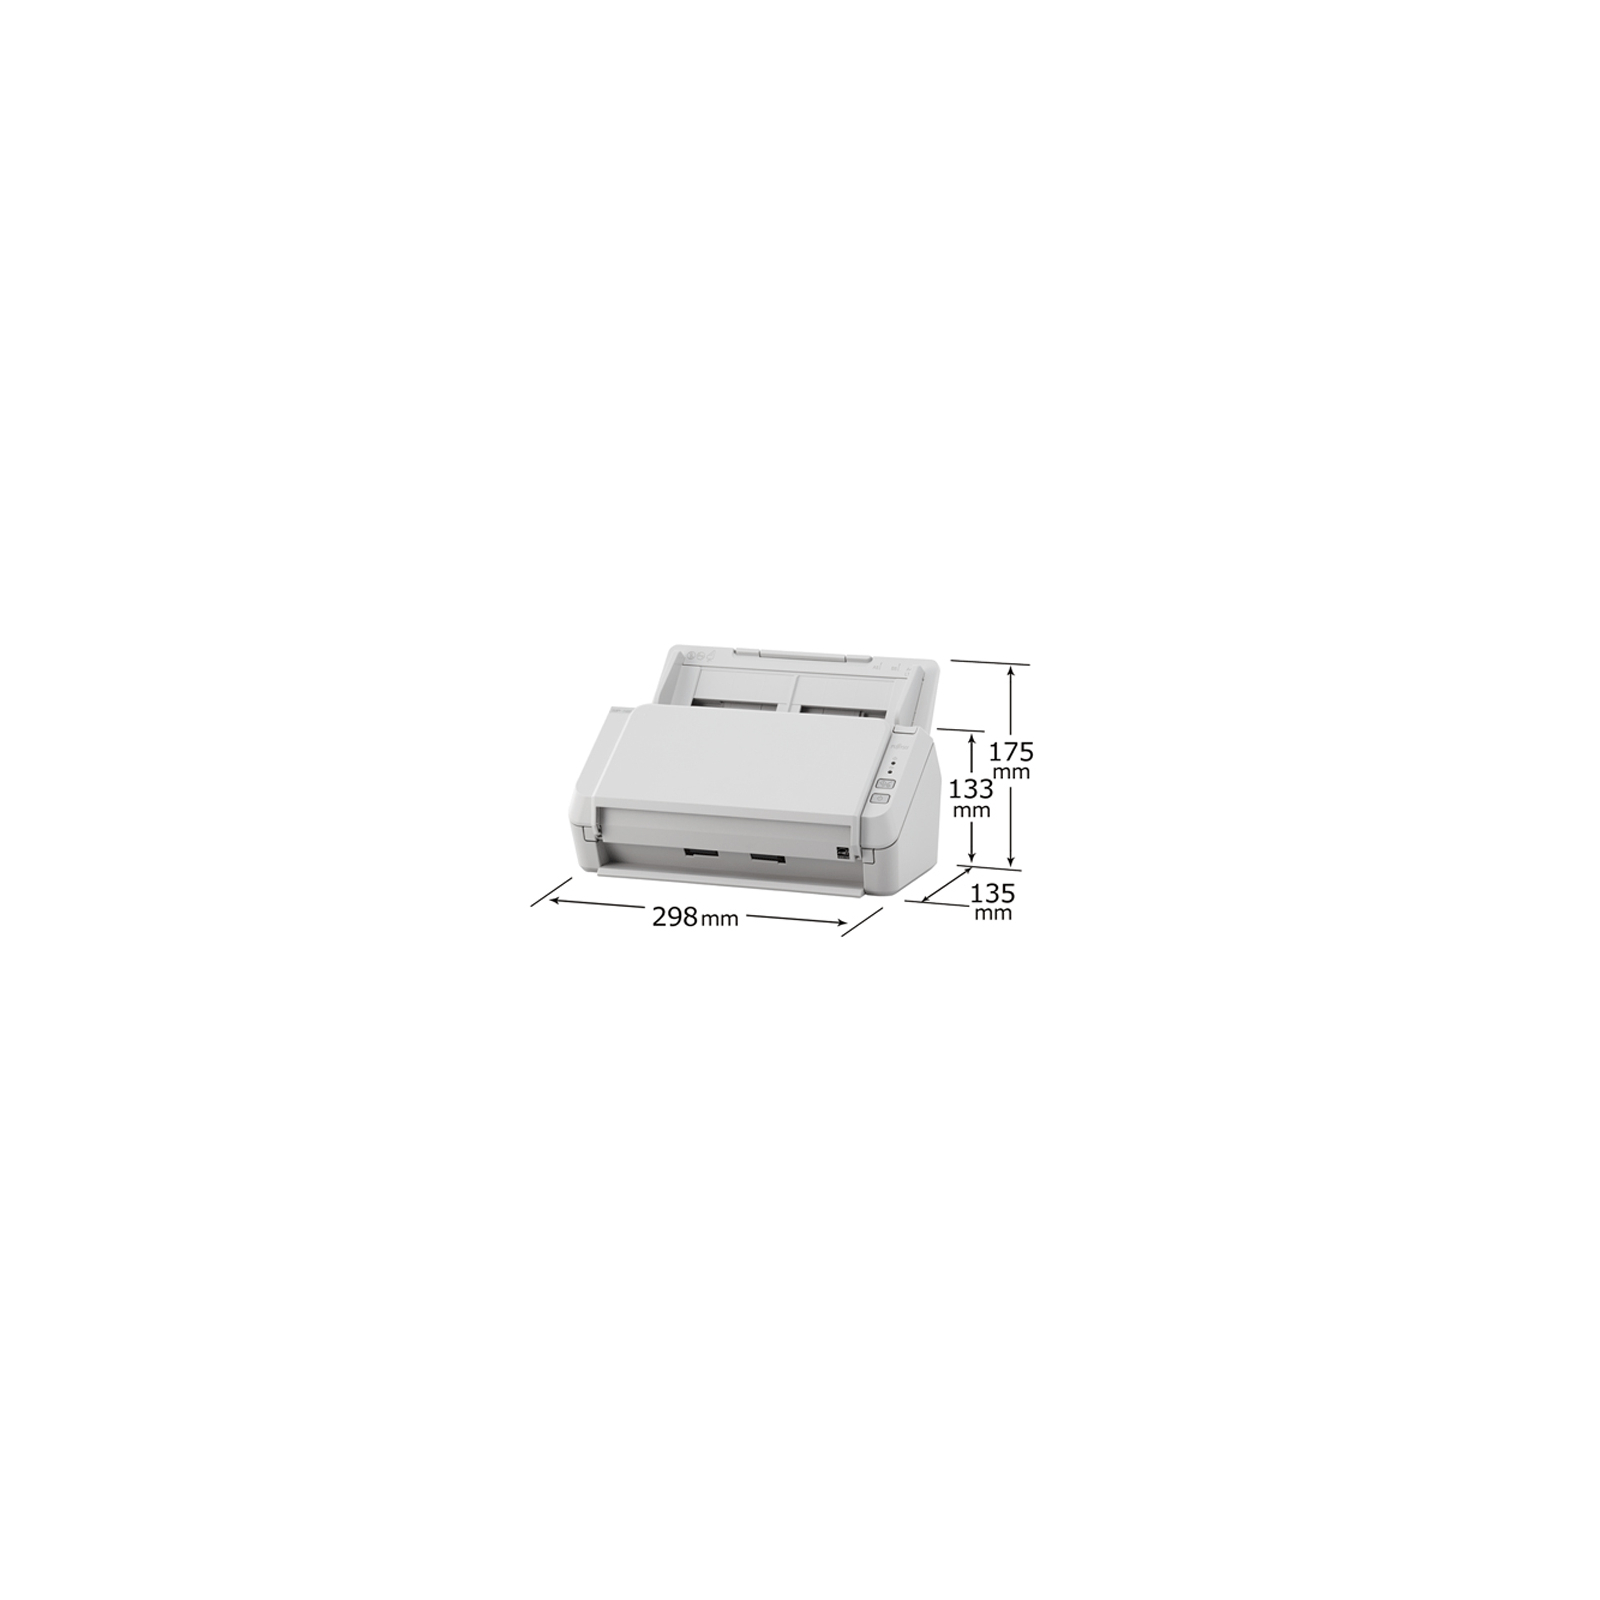 Сканер Fujitsu SP-1130 (PA03708-B021) зображення 6